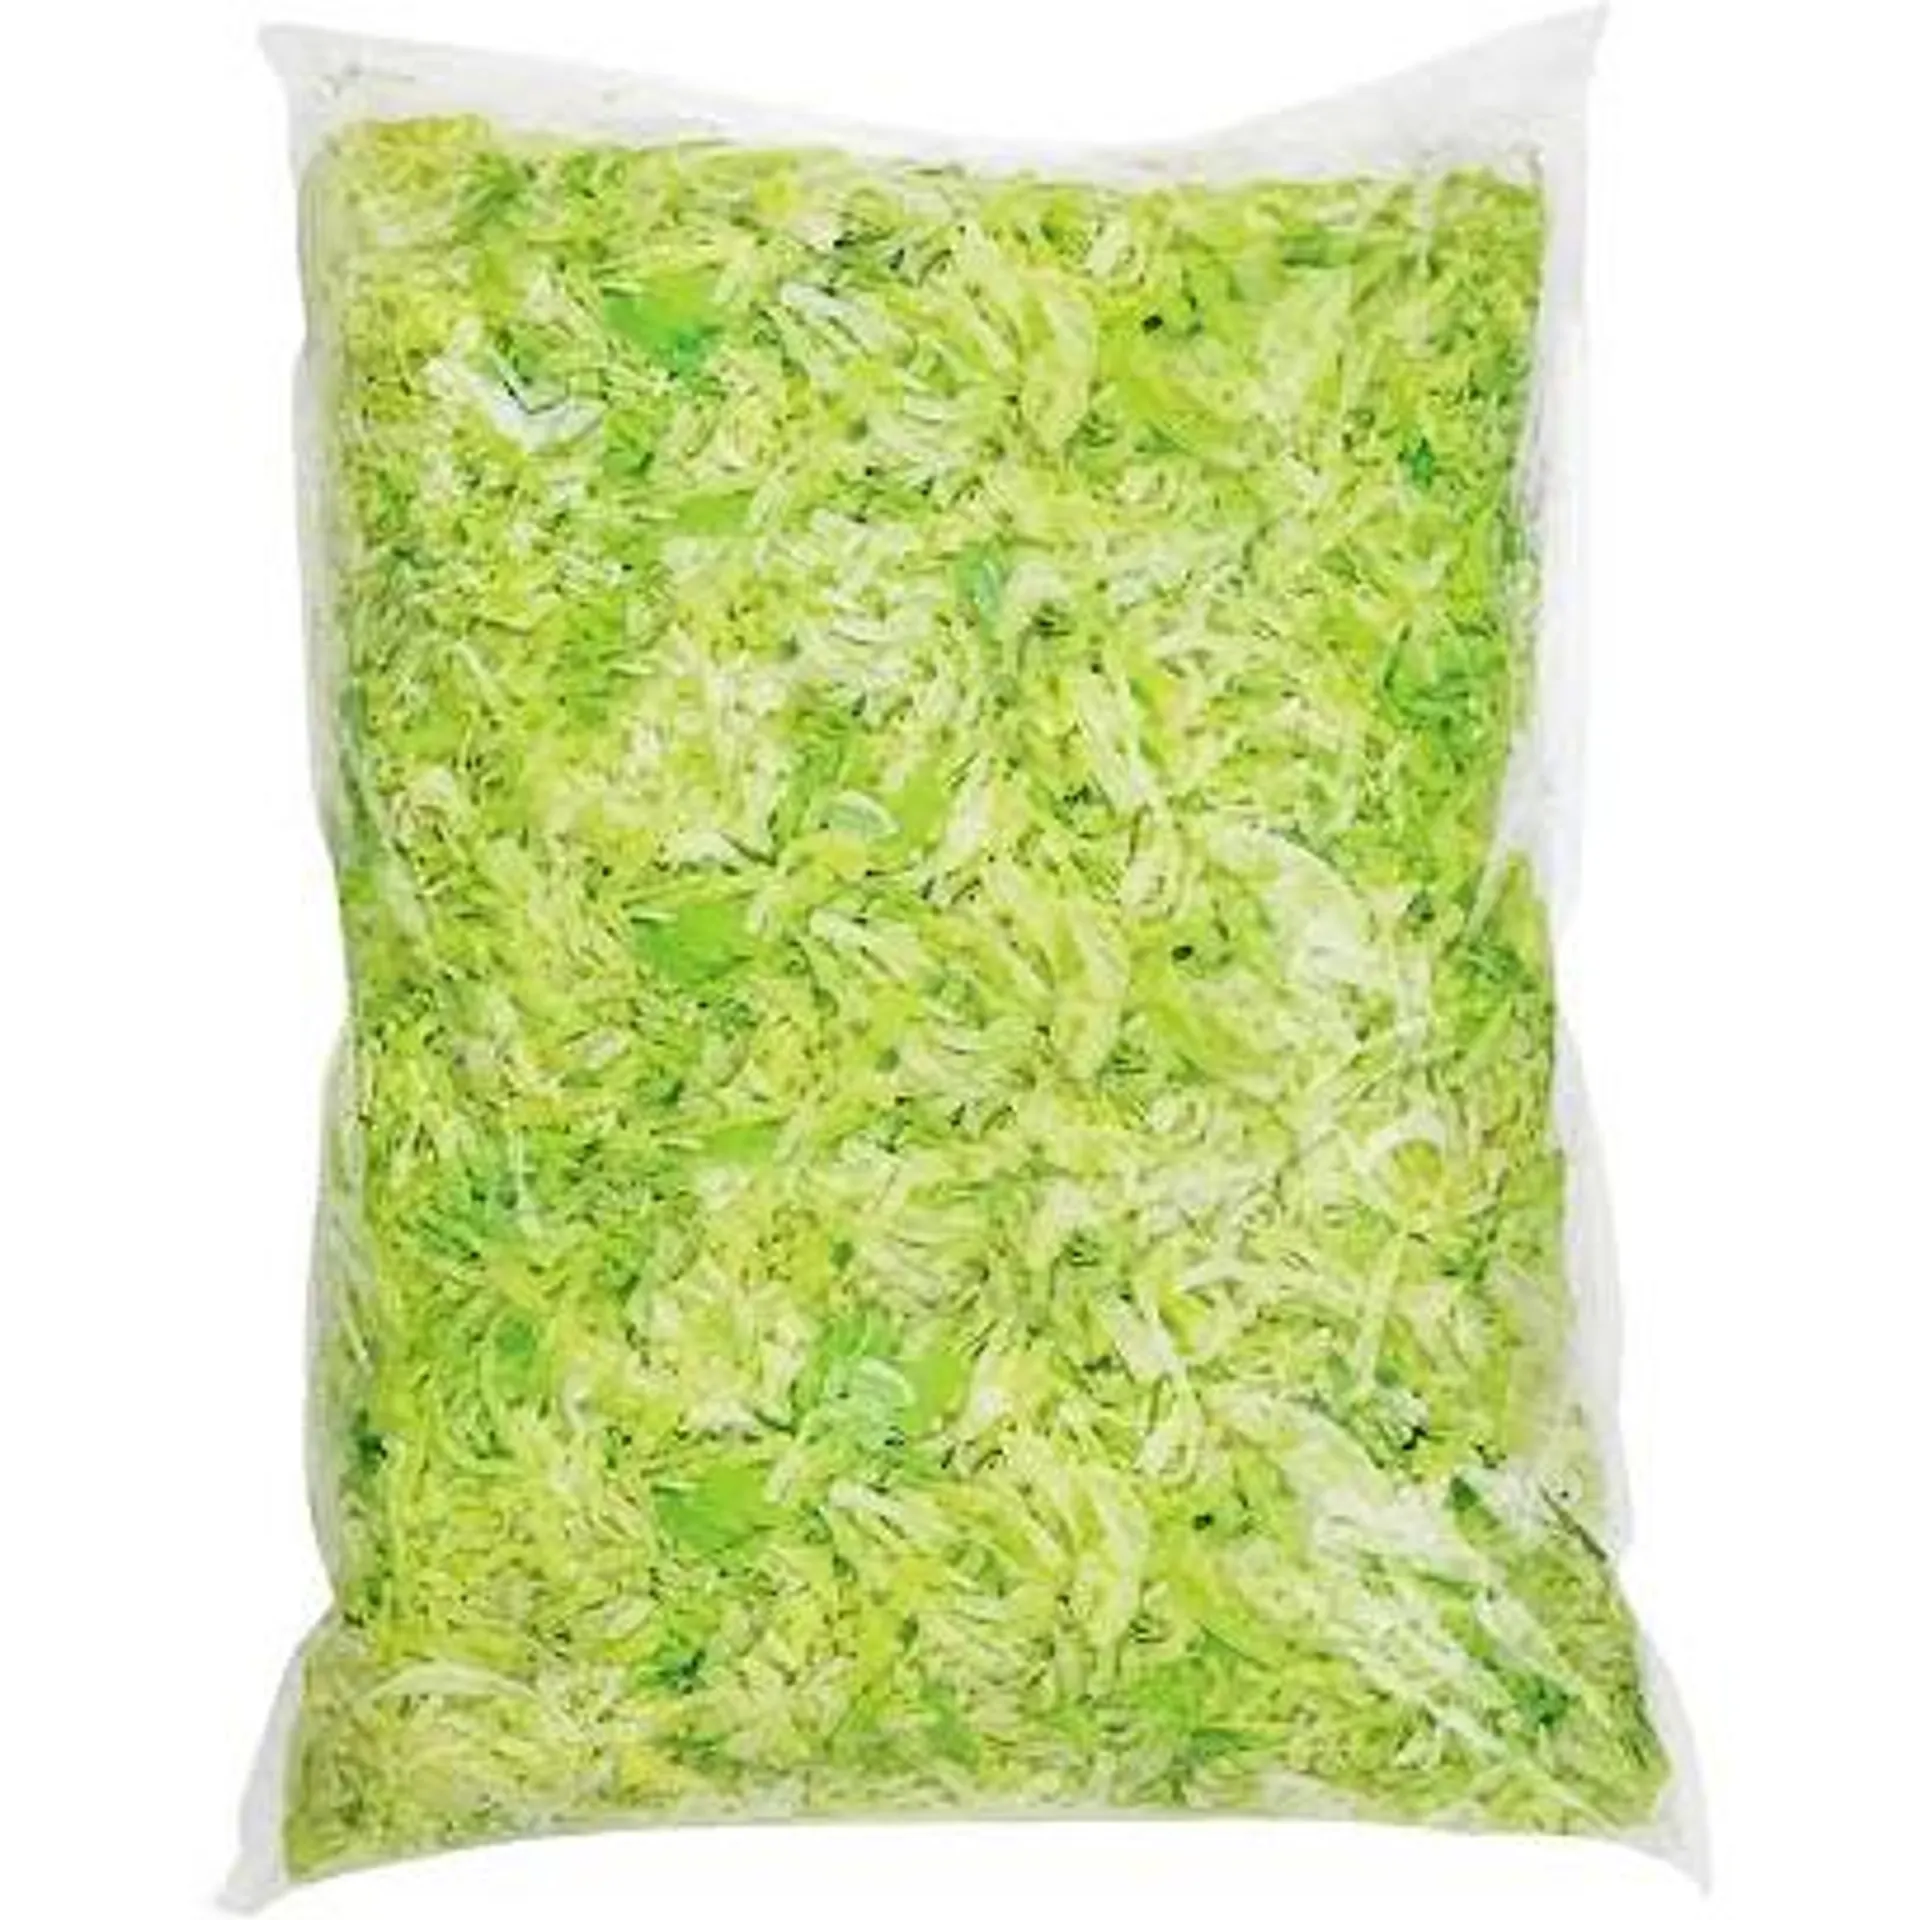 Salad mix (cabbage carrot purple cabbage ) - 5lb